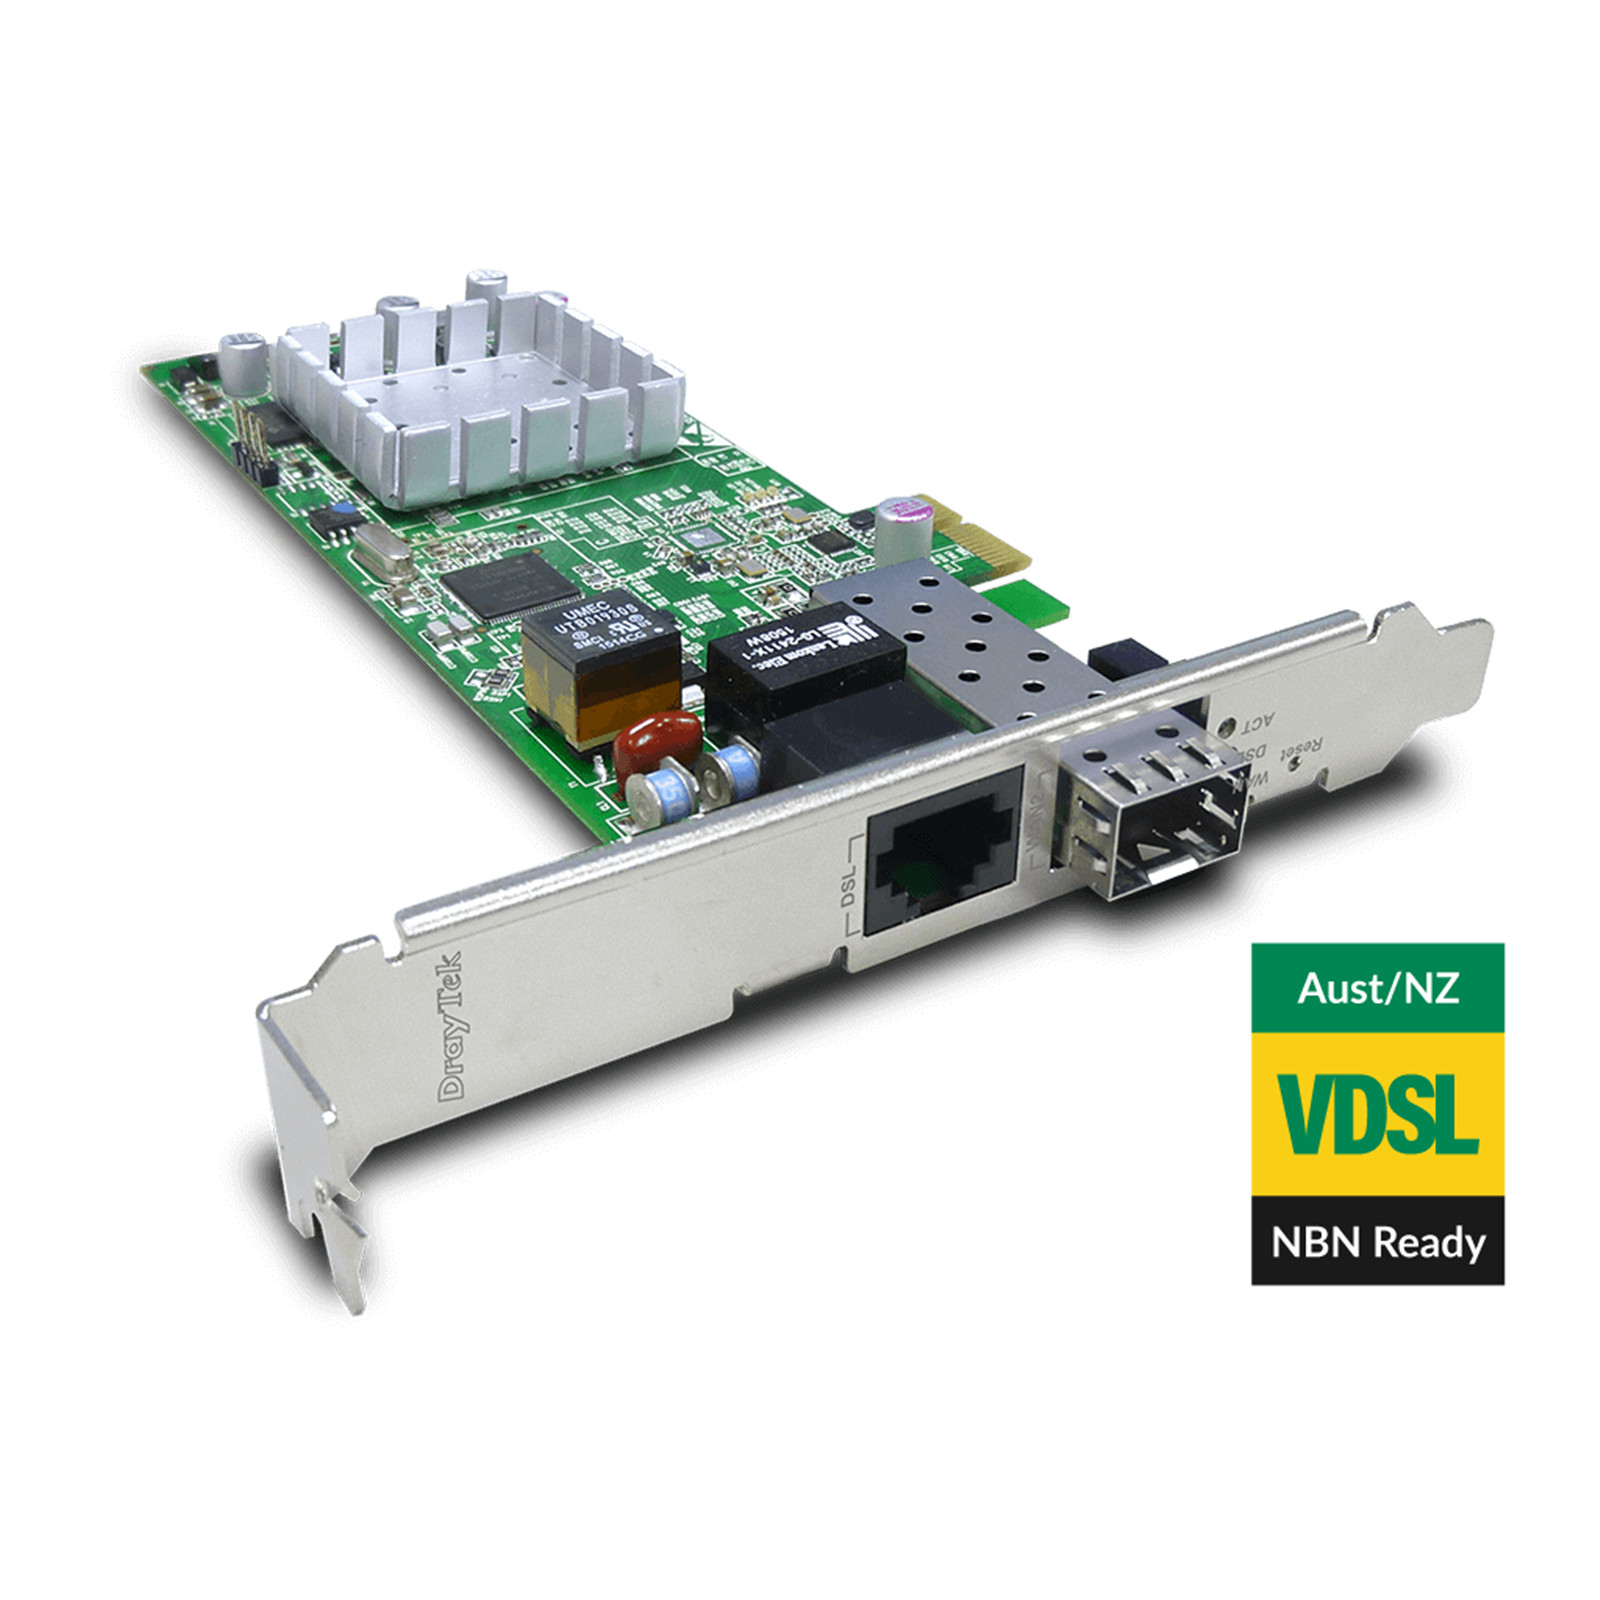 Buy the DrayTek 132F ADSL/VDSL PCI-E Gigabit Modem with SFP Port ( DVNIC132F ) - PBTech.com